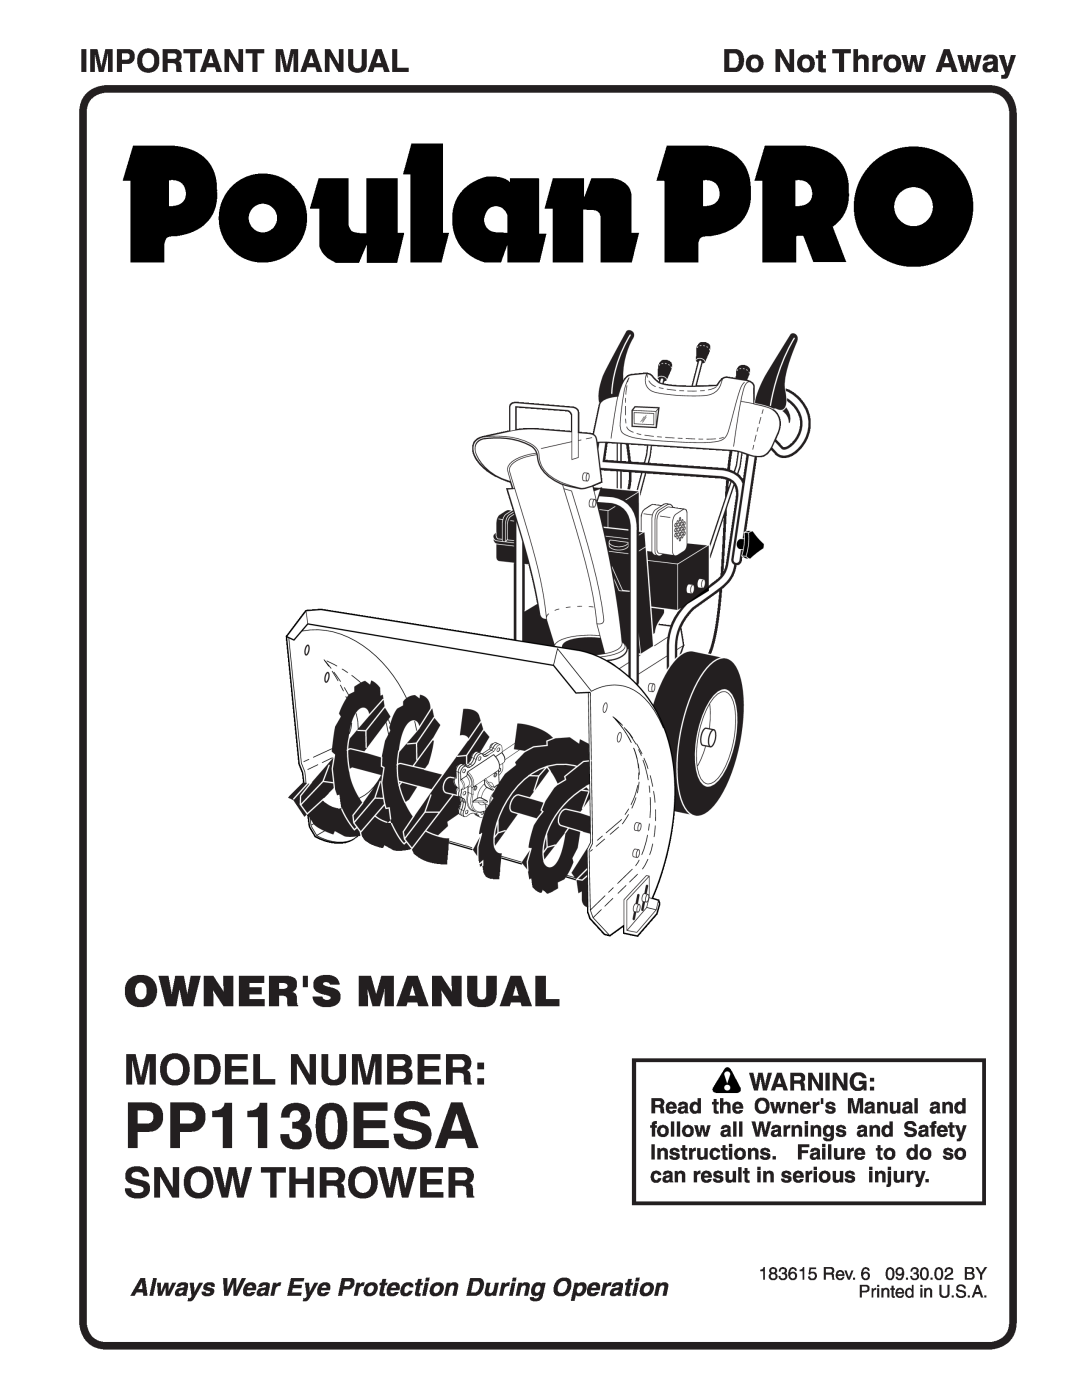 Poulan PP1130ESA owner manual Snow Thrower, Important Manual, Do Not Throw Away 